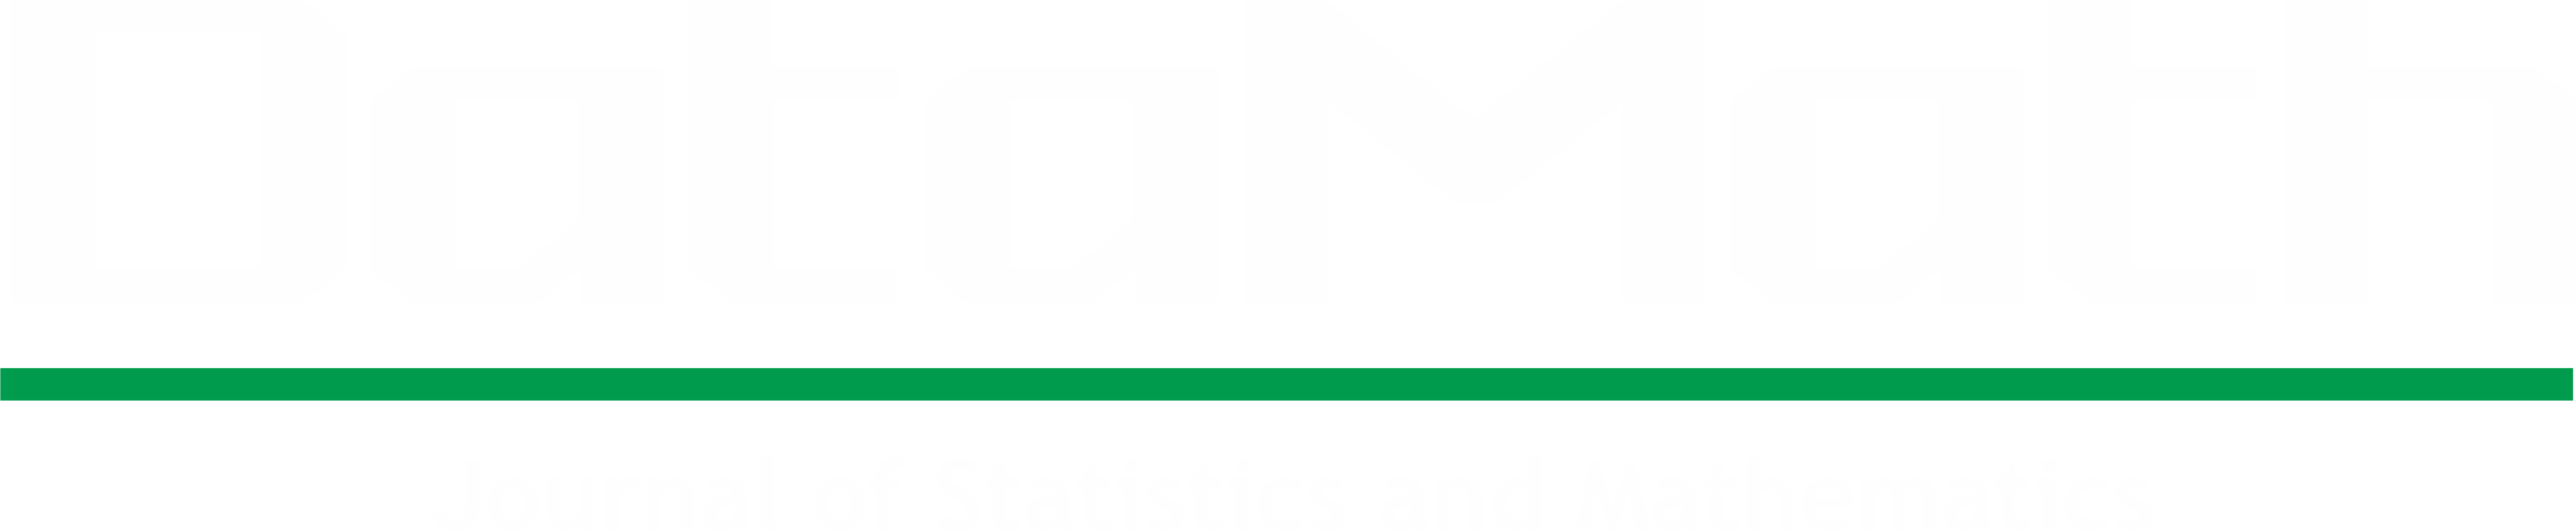 DataMath: Journal of Statistics and Mathematics